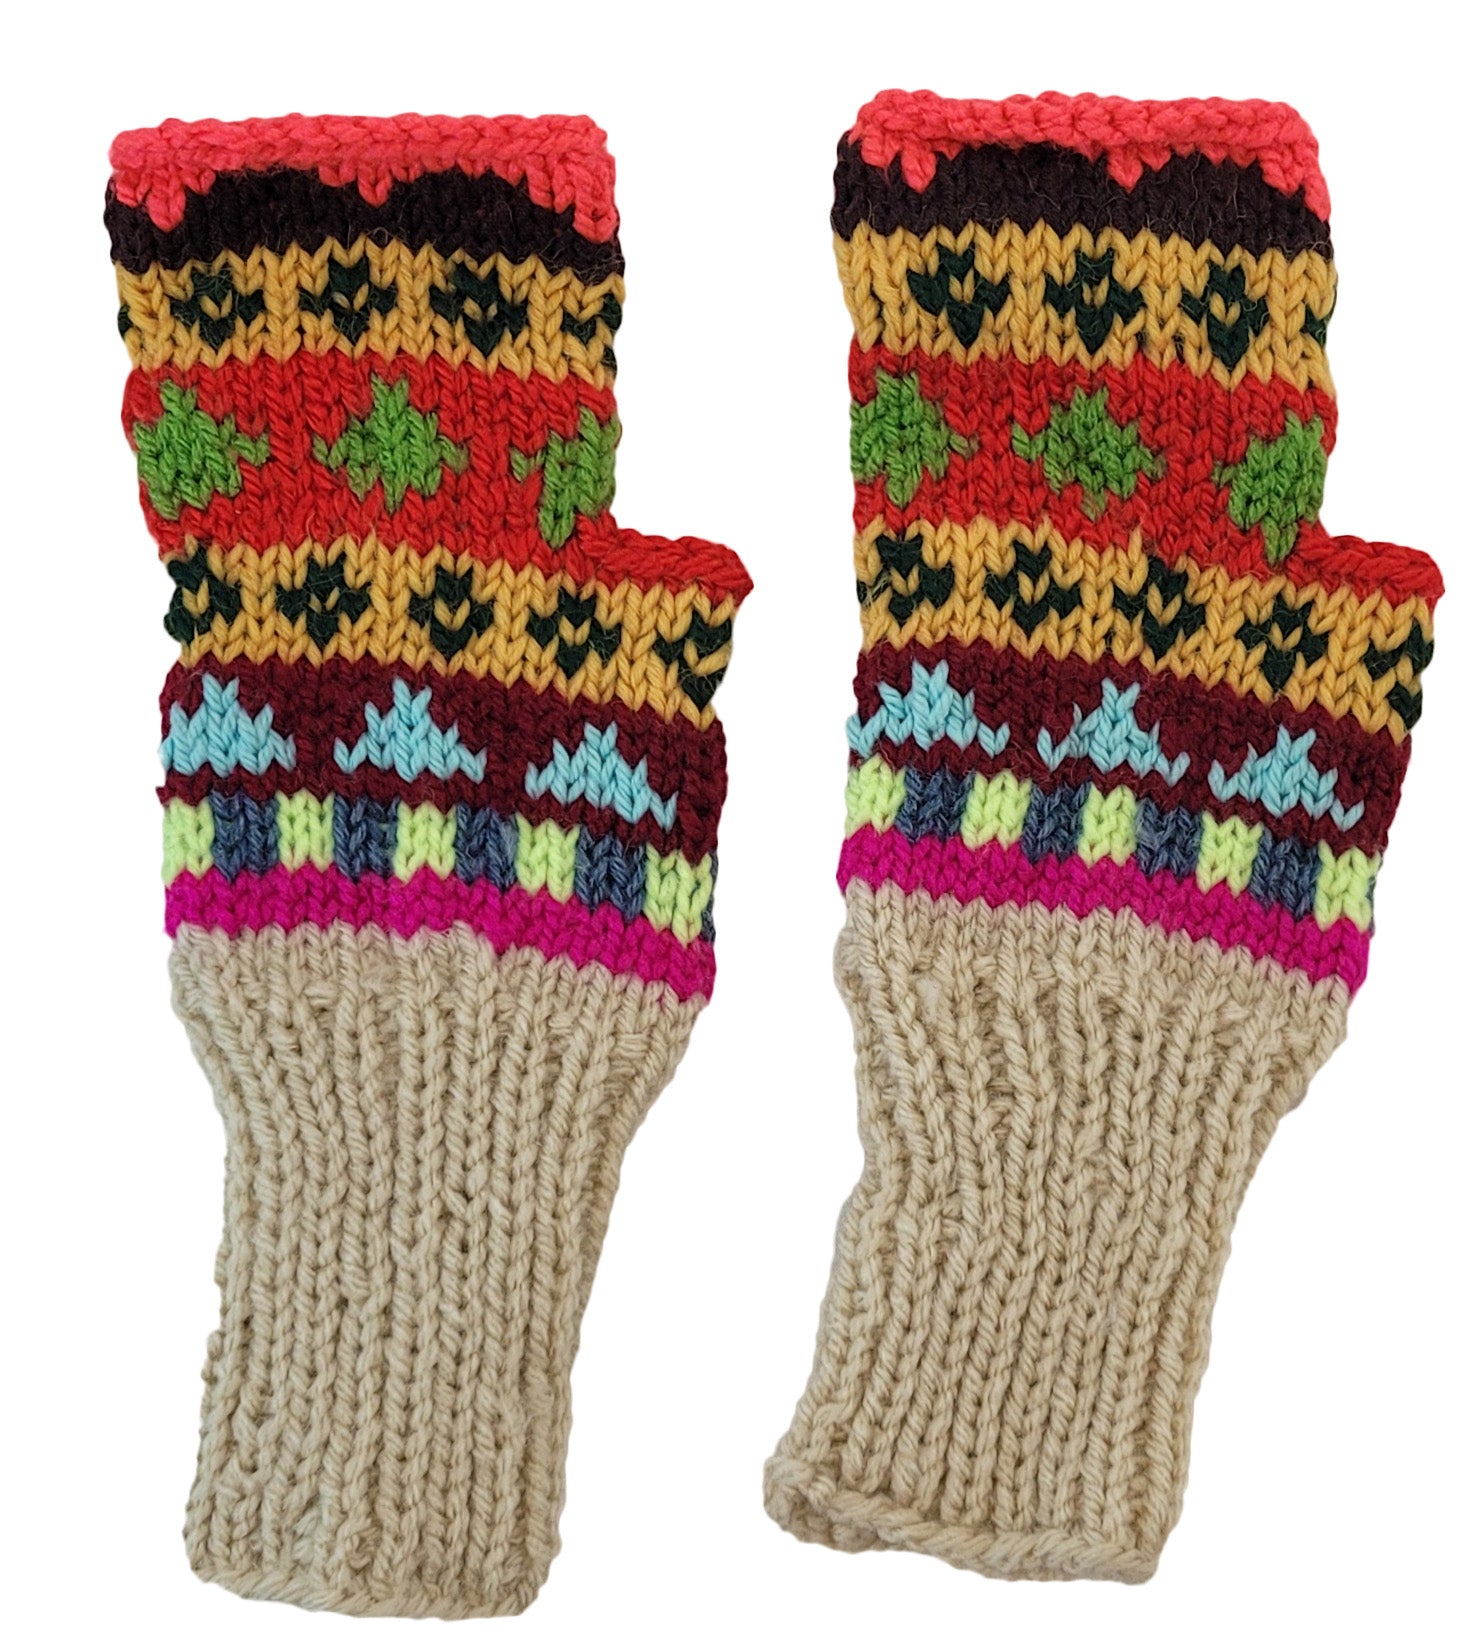 4 Maryam Crochet Beanie and Glove Set - fingerless mittens